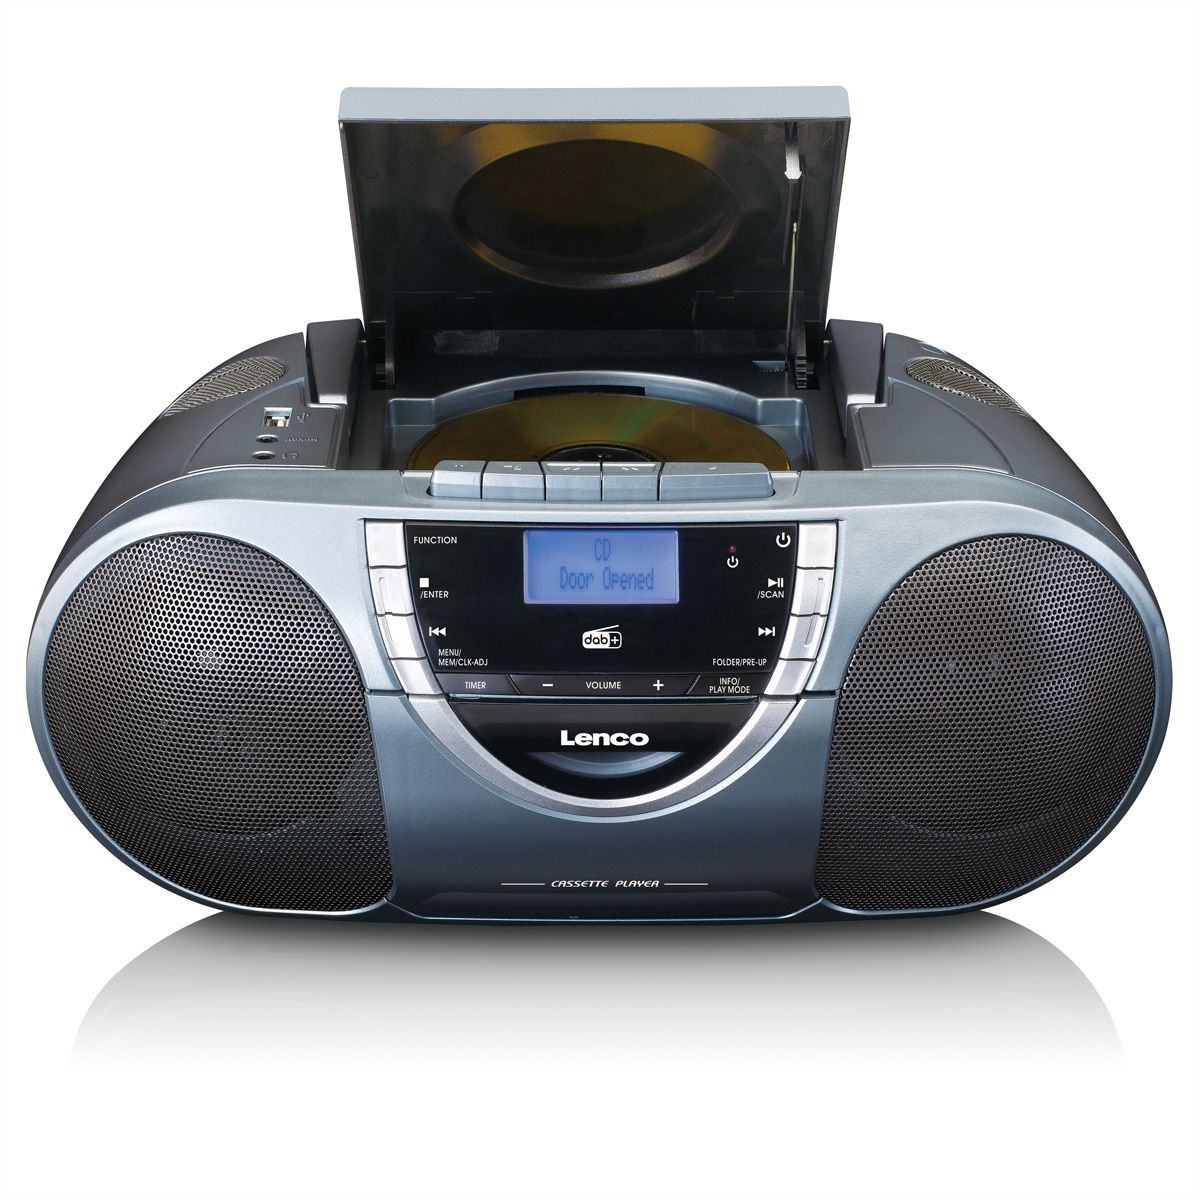 CD/MP3-Player, grau - DAB+-Radio/Boombox DAB+, Lenco FM, SECOMP GmbH SCD-6800, Kassette, Nederland